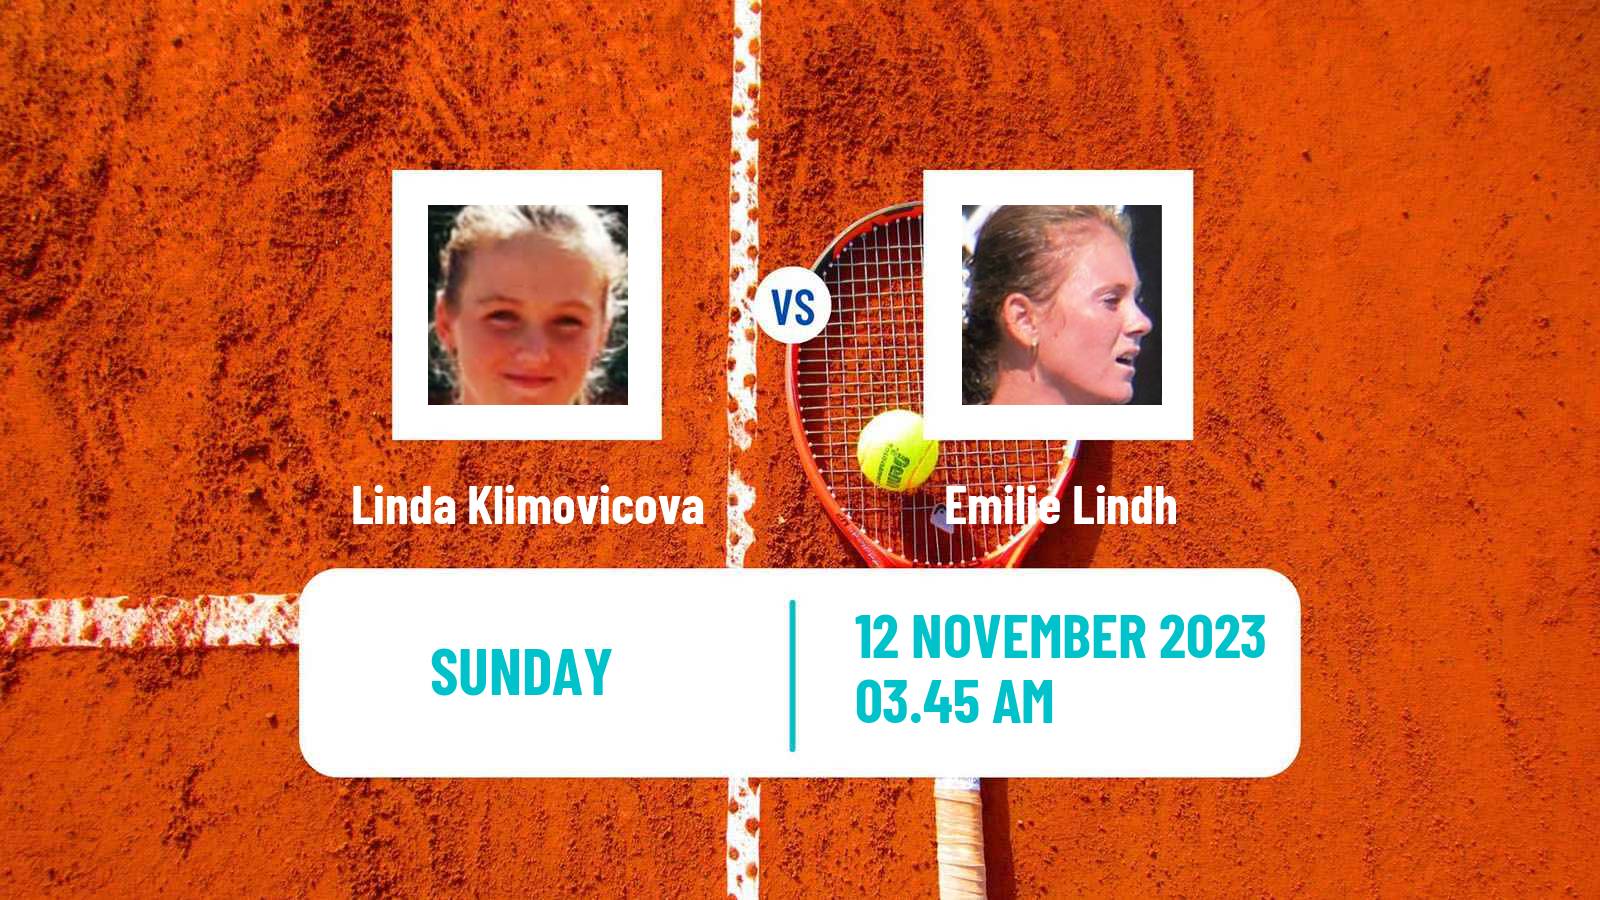 Tennis ITF W25 Solarino 2 Women Linda Klimovicova - Emilie Lindh